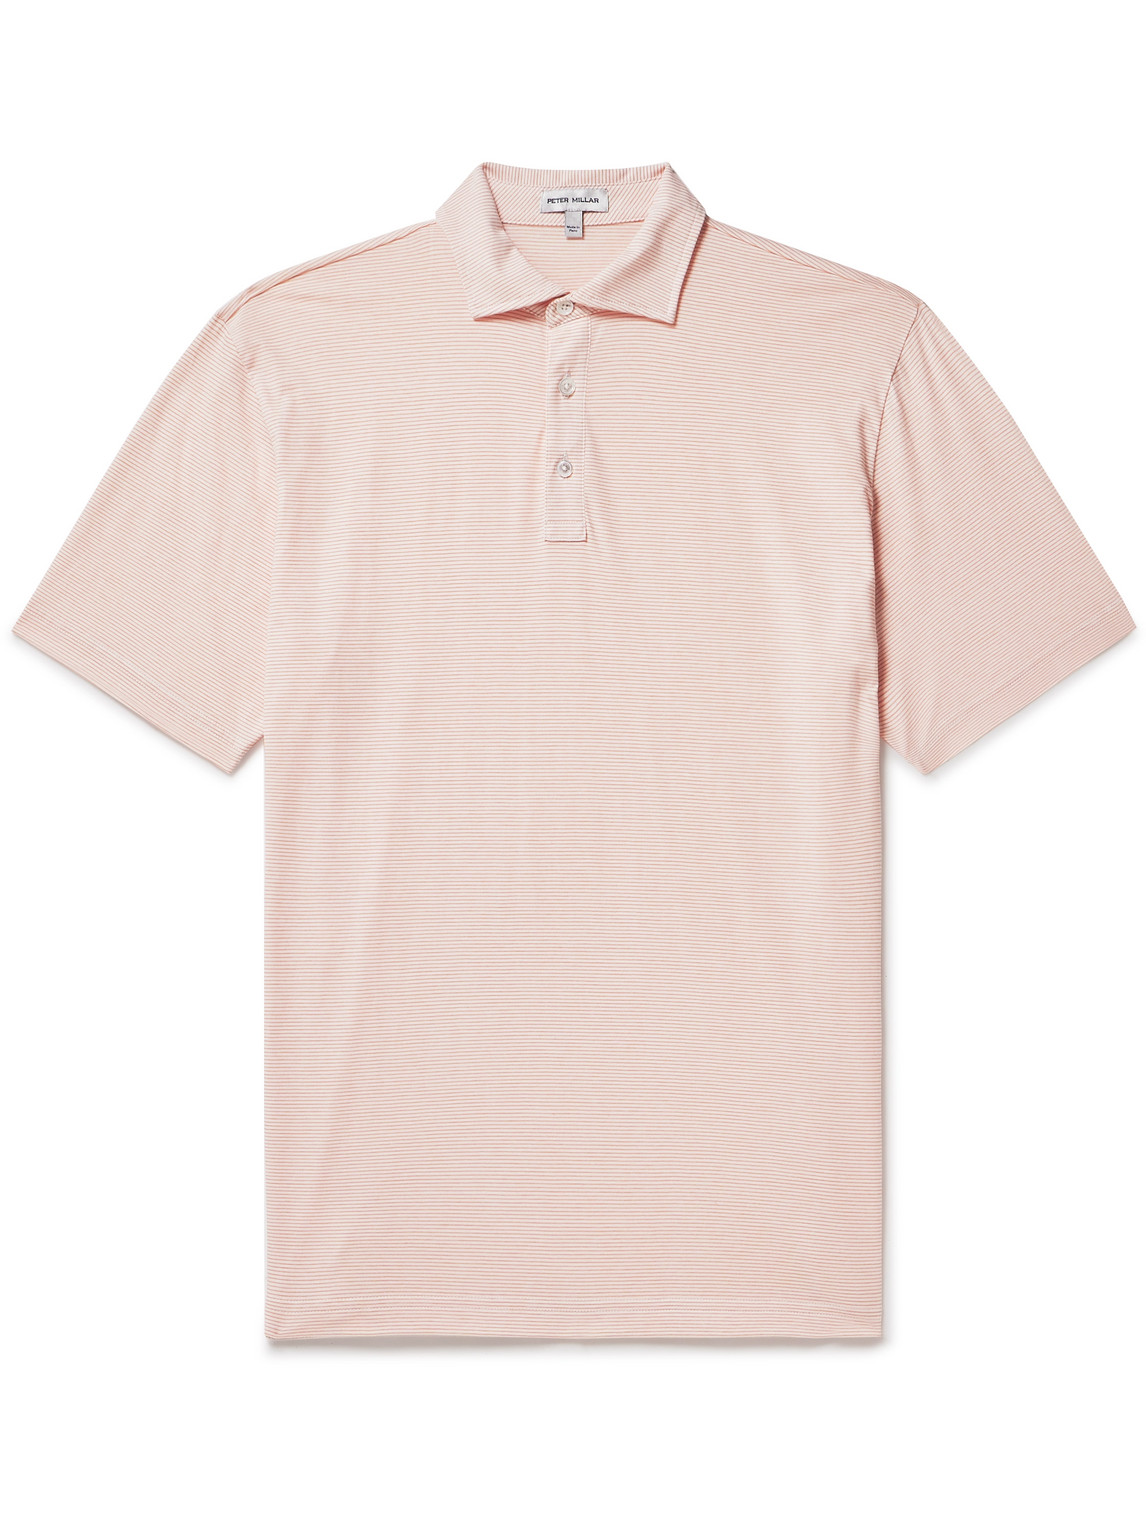 Peter Millar - Pilot Striped Pima Cotton-Jersey Polo Shirt - Men - Pink - L von Peter Millar